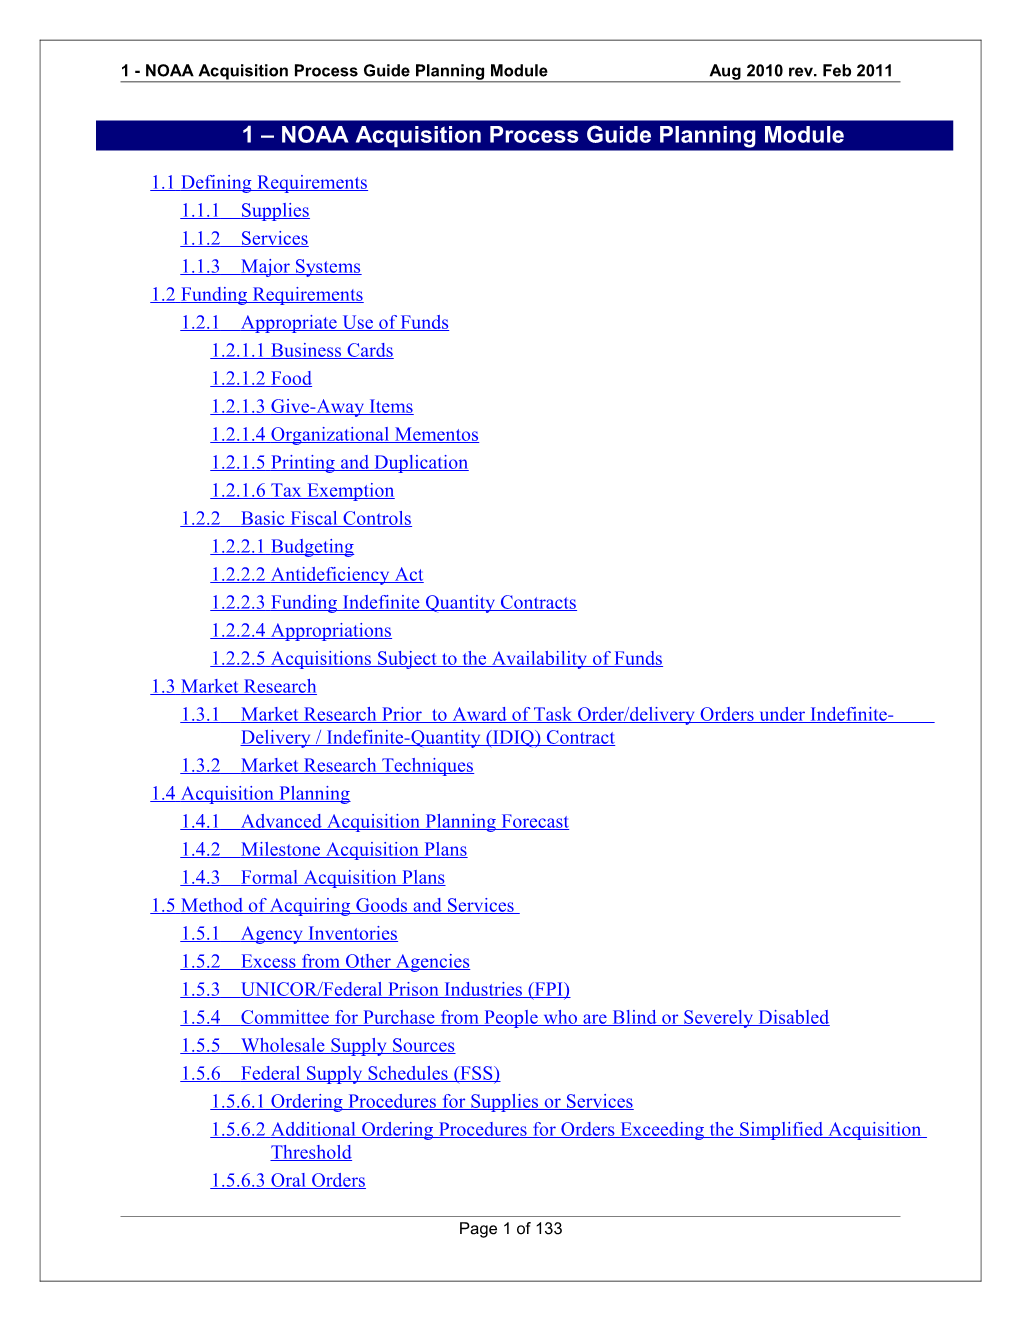 1 - NOAA Acquisition Process Guide Planning Module Aug 2010 Rev. Feb 2011